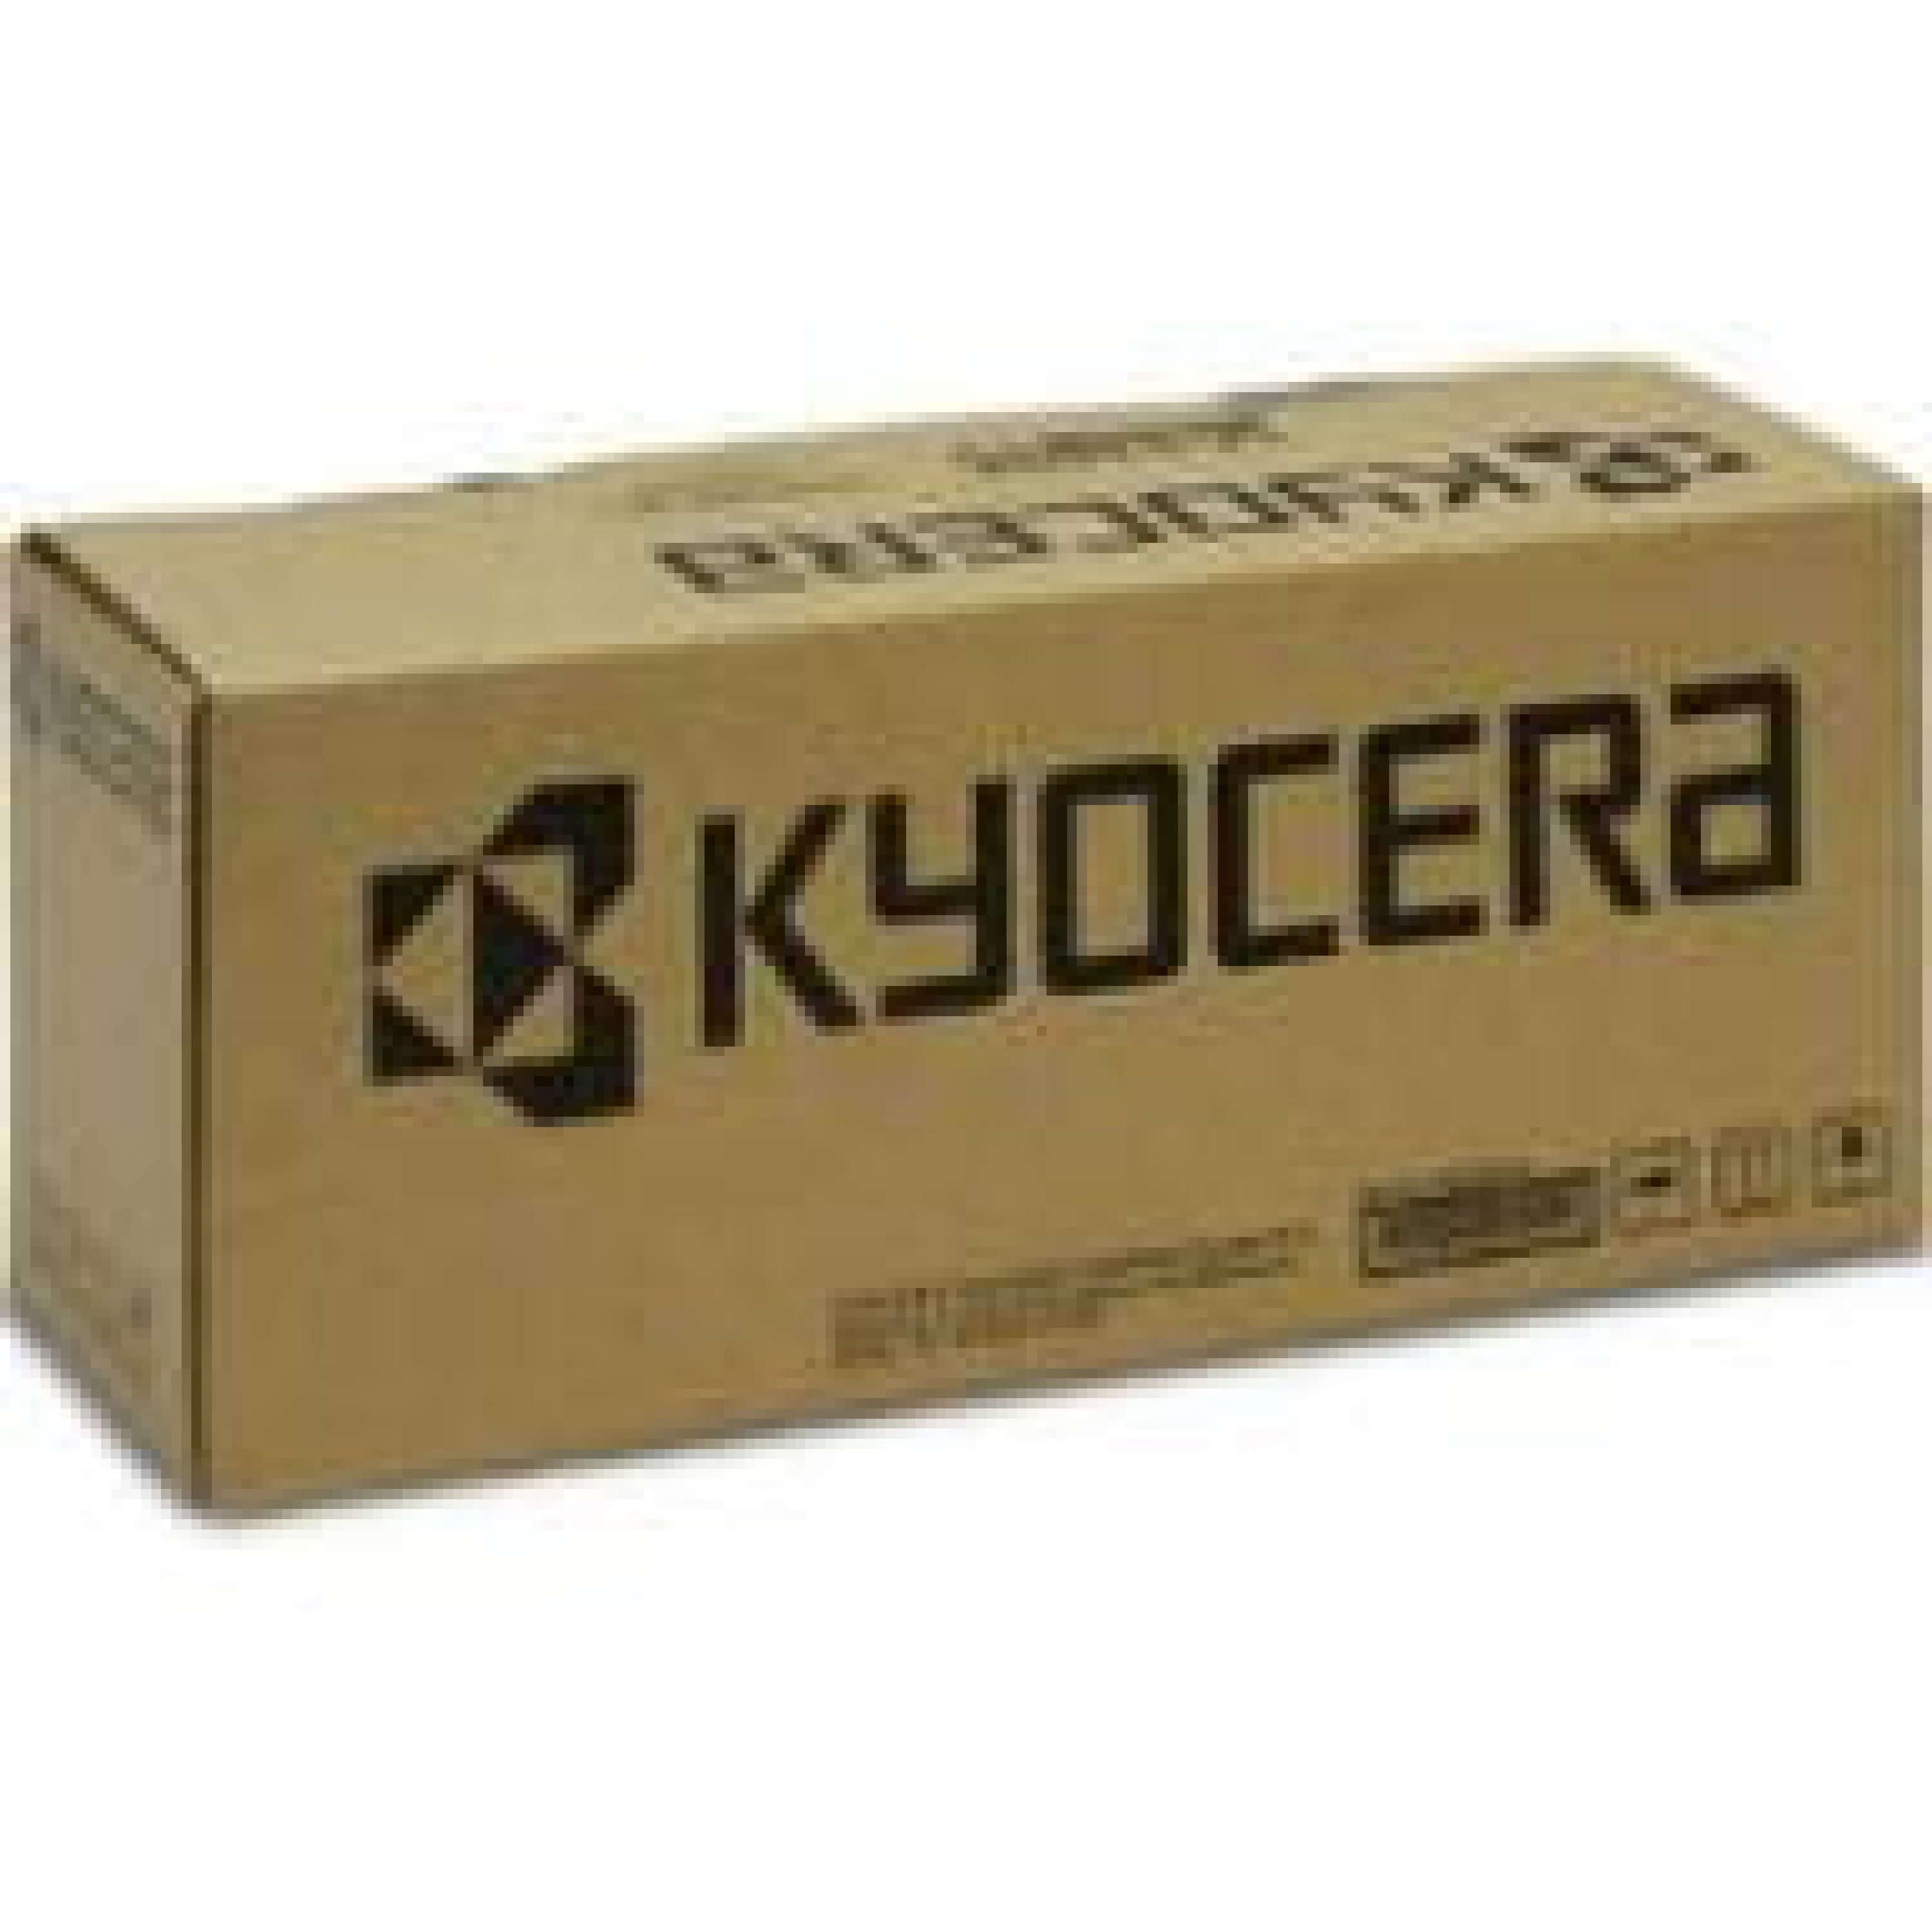 Original Toner Kyocera MA 2100 cwfx (1T0C0A0NL1 / TK-5430K)